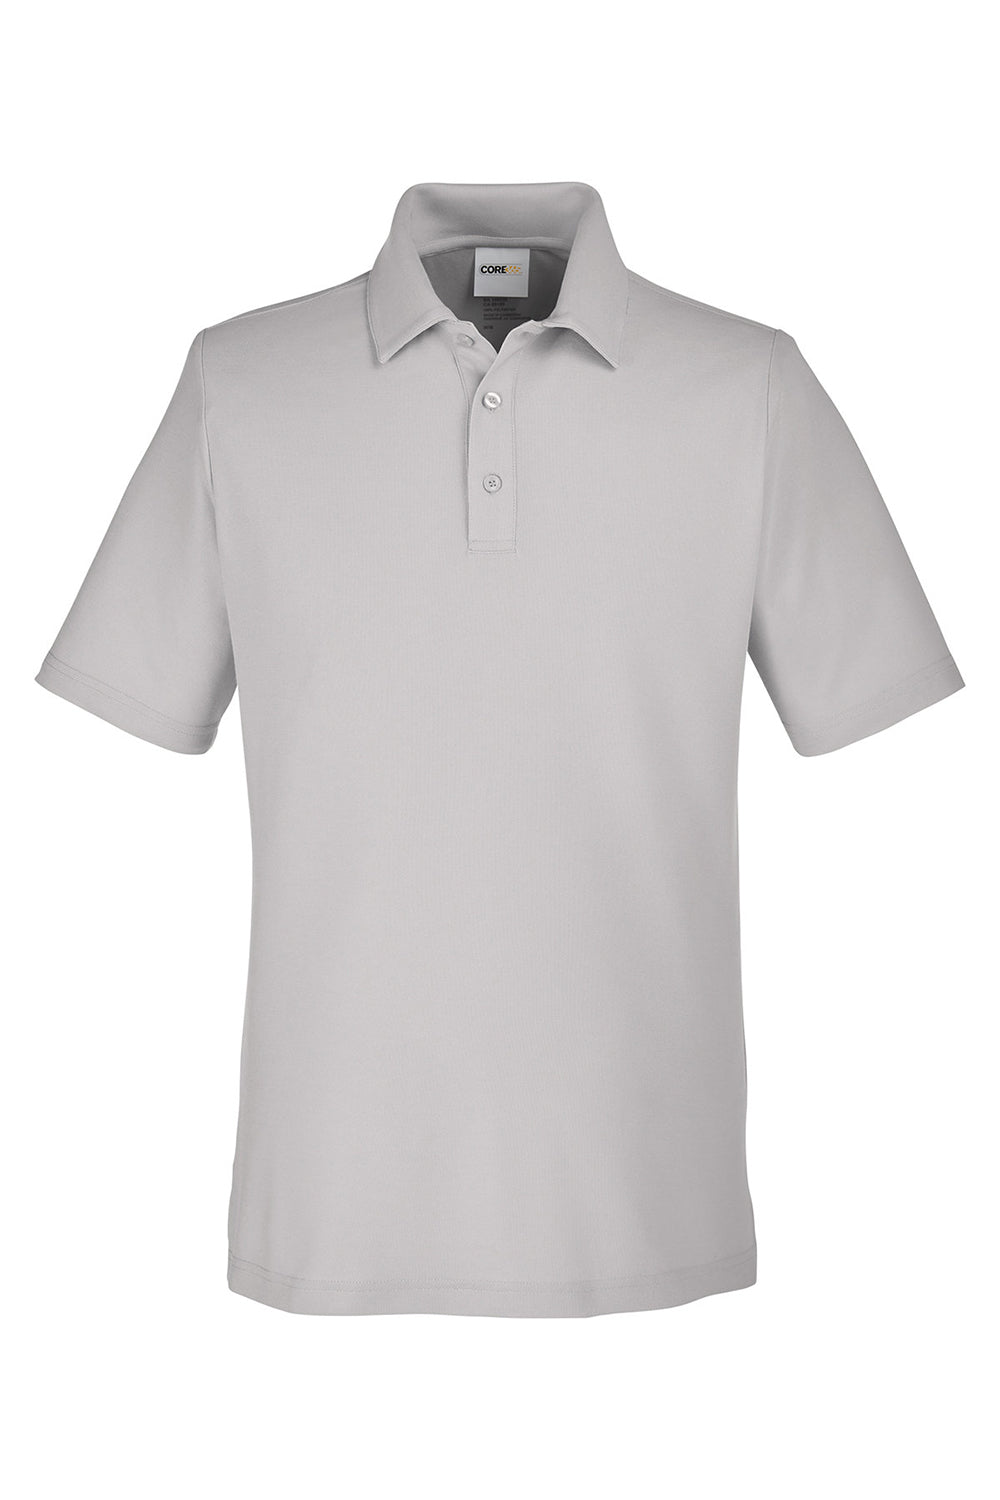 Core 365 CE112 Mens Fusion ChromaSoft Performance Moisture Wicking Short Sleeve Polo Shirt Platinum Grey Flat Front